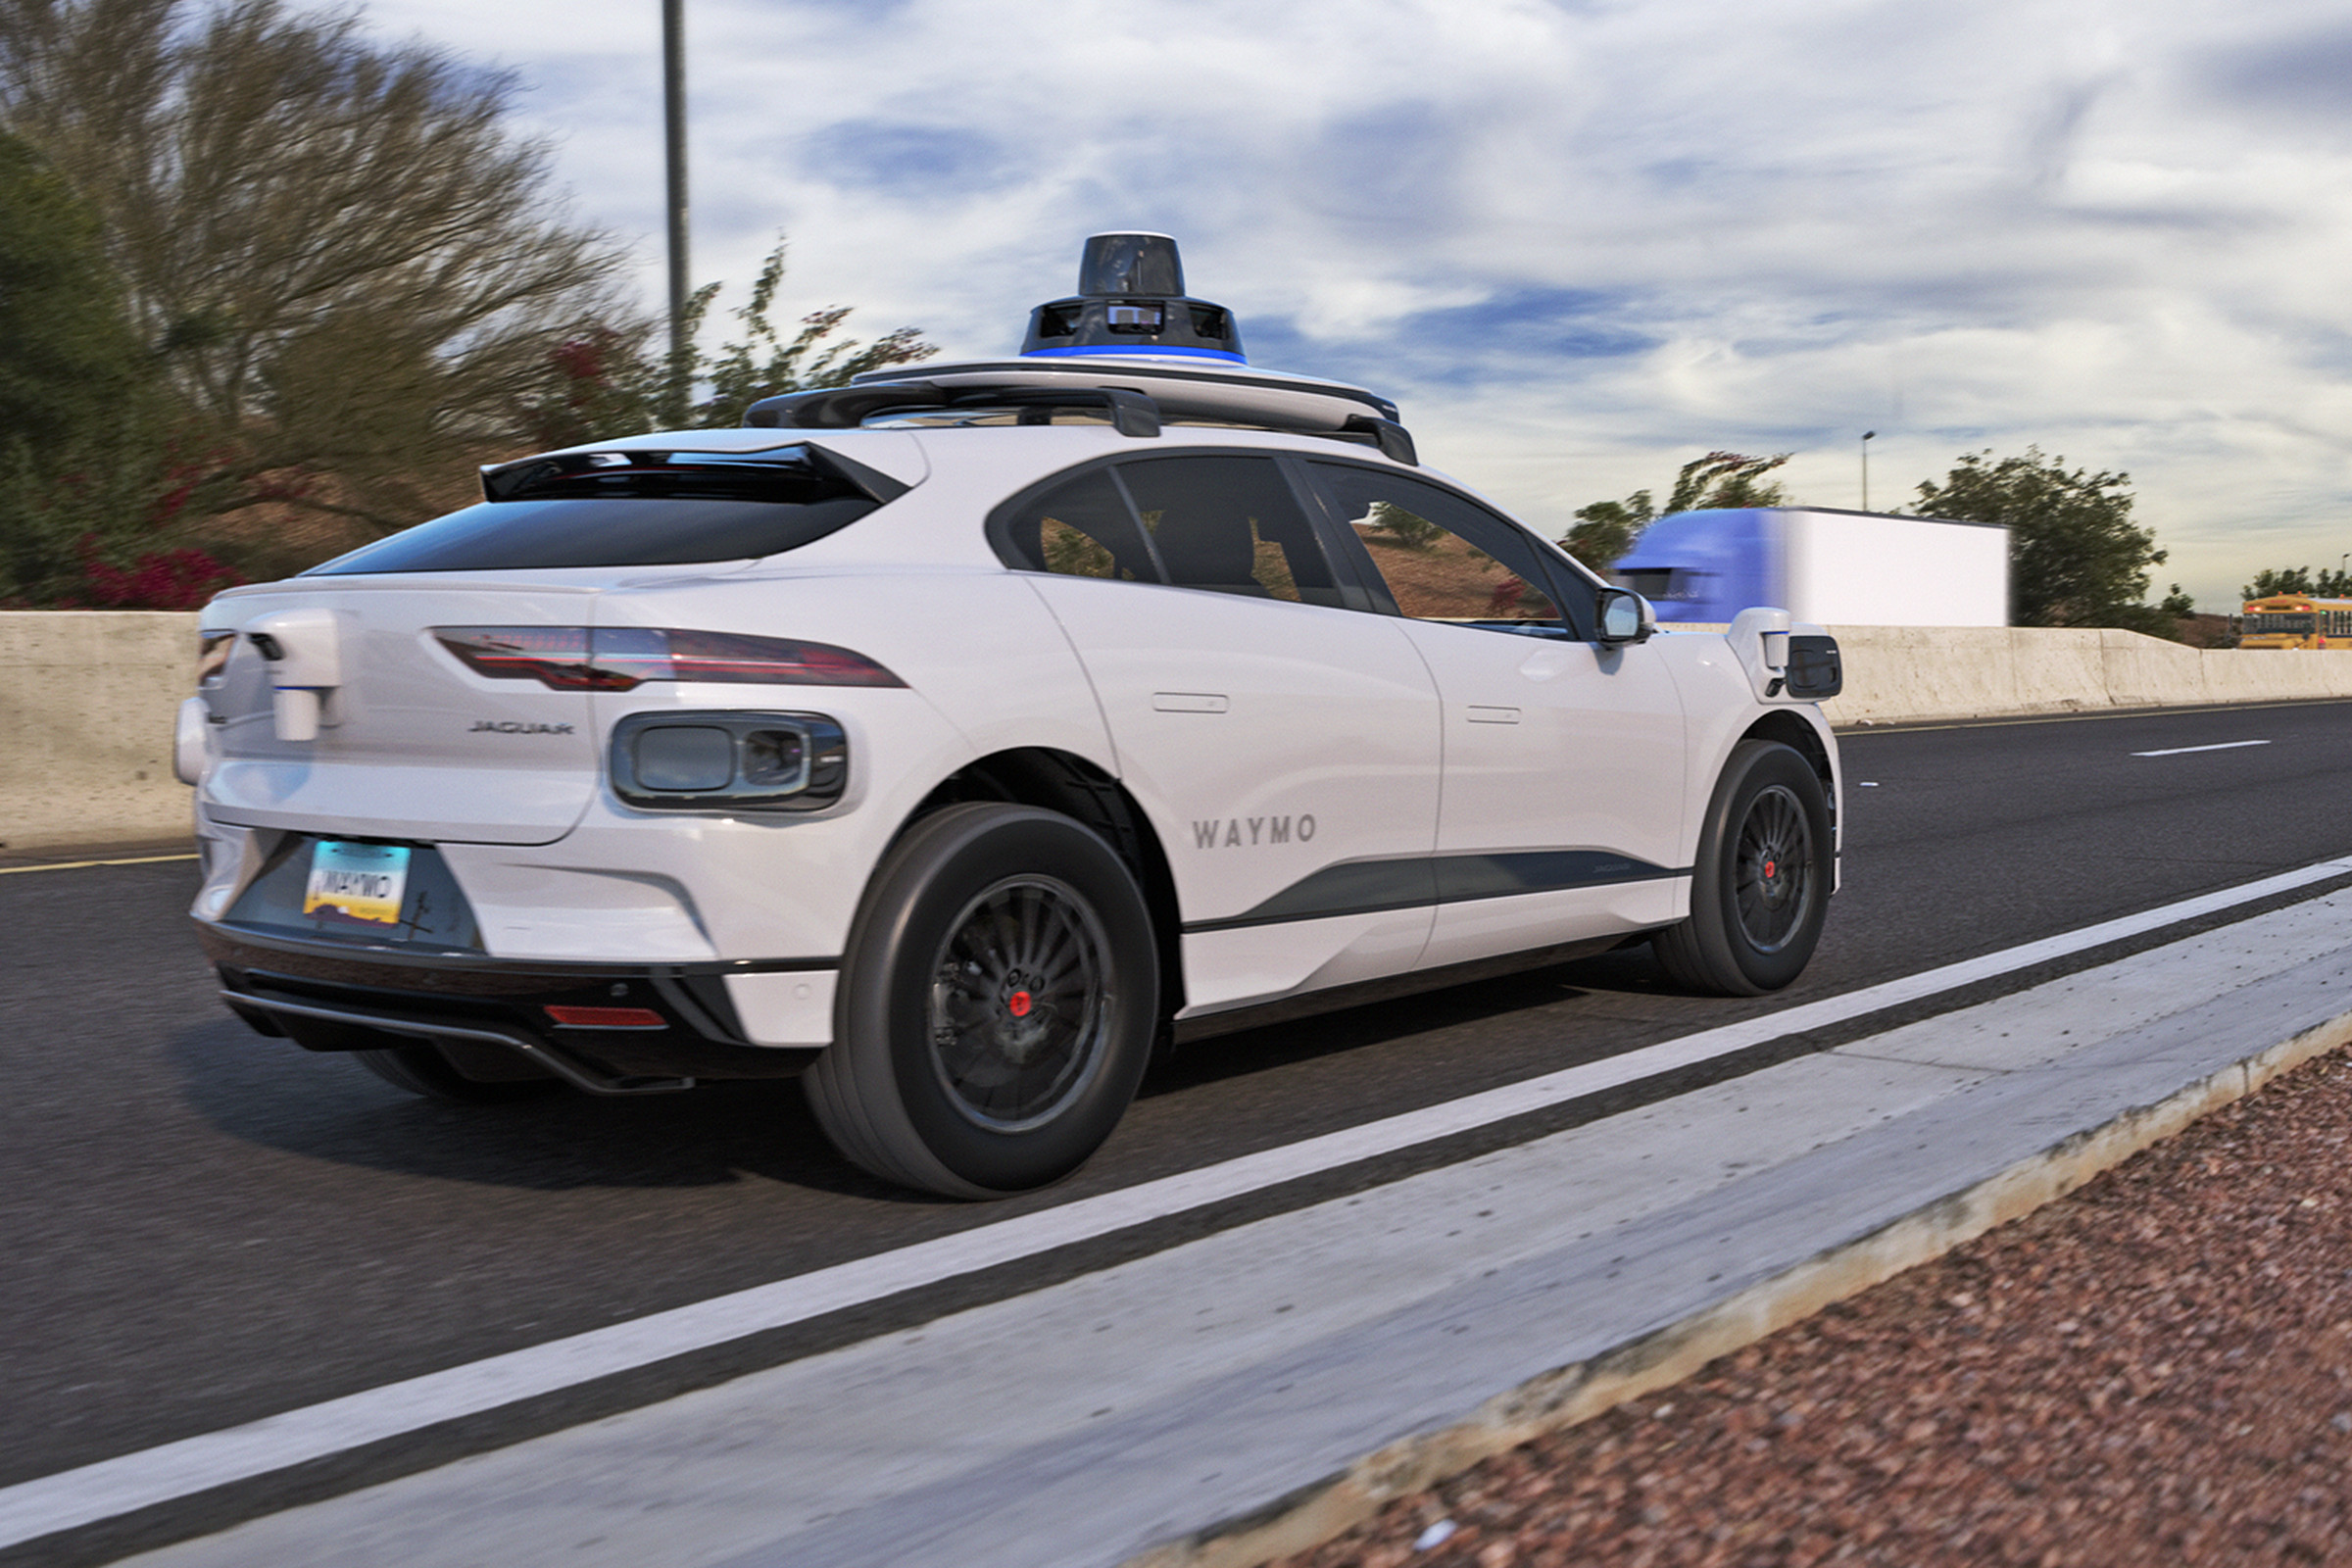 Waymo driverless vehicle on a highway